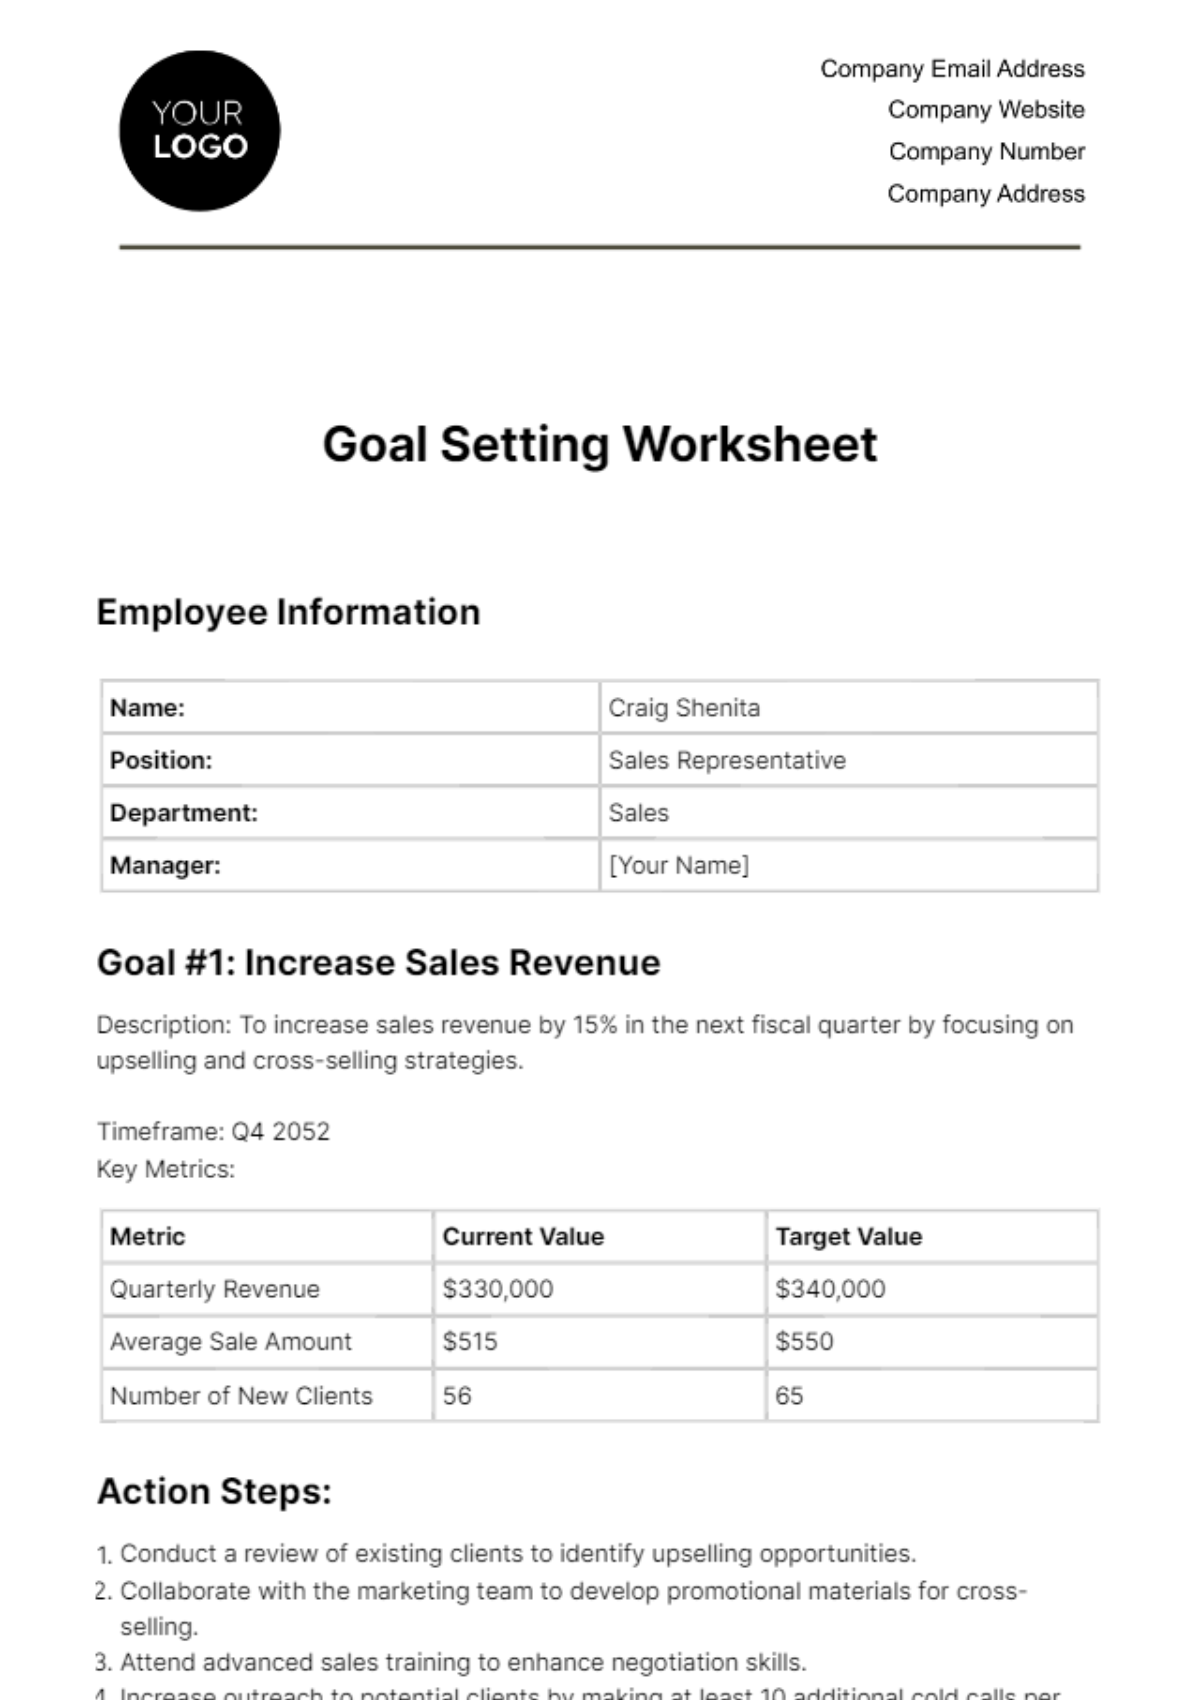 Free Goal Setting Worksheet HR Template